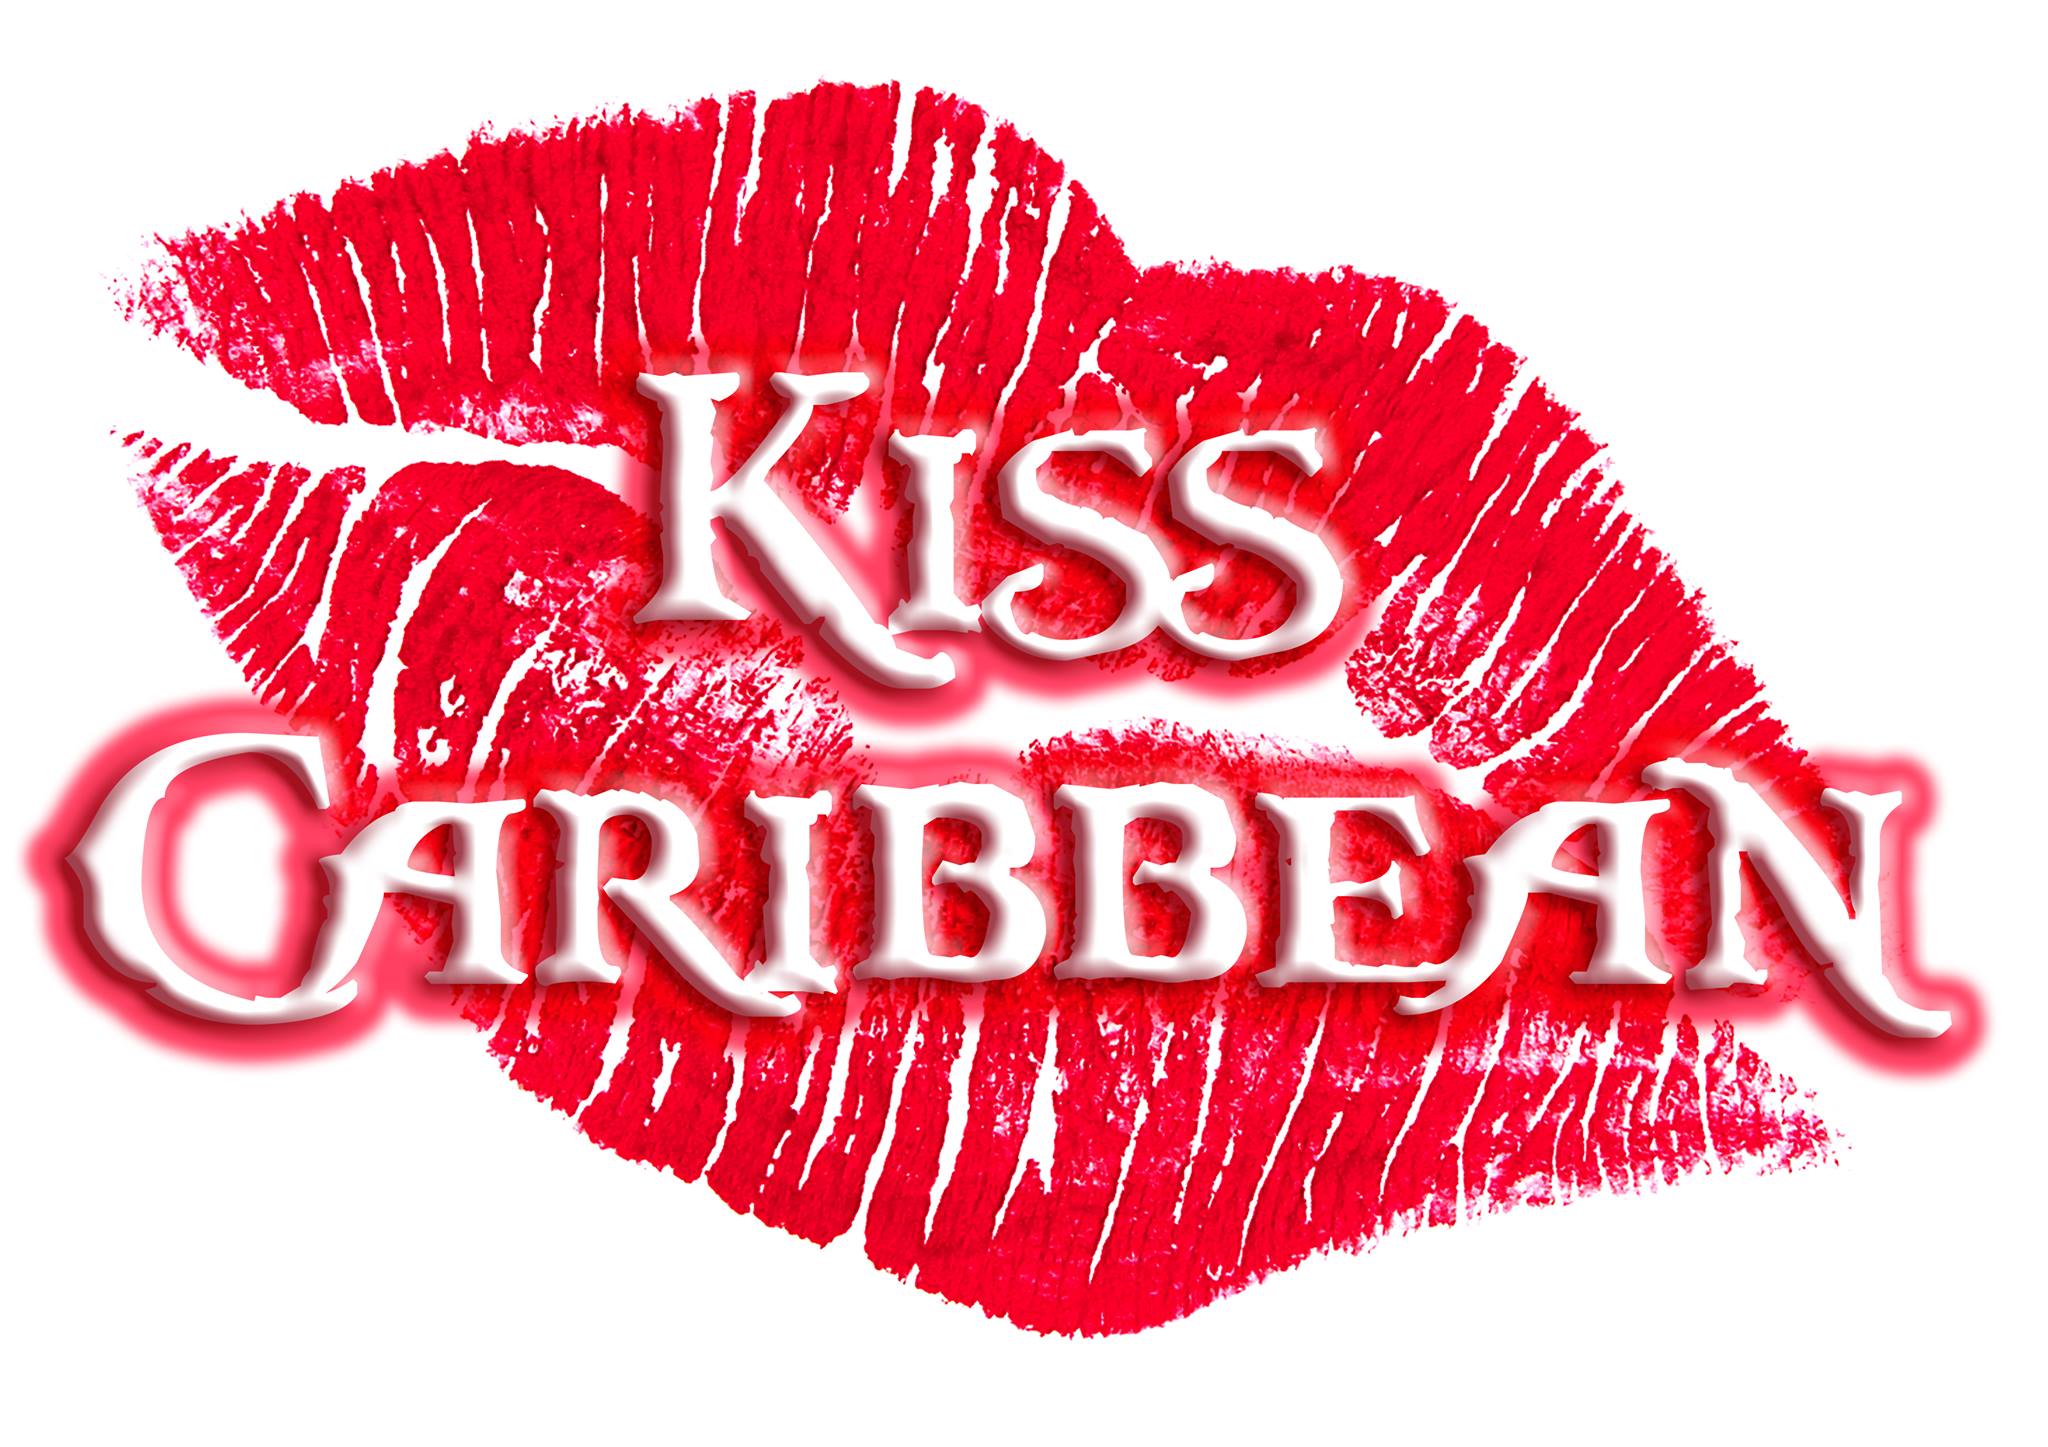 Kiss Caribbean